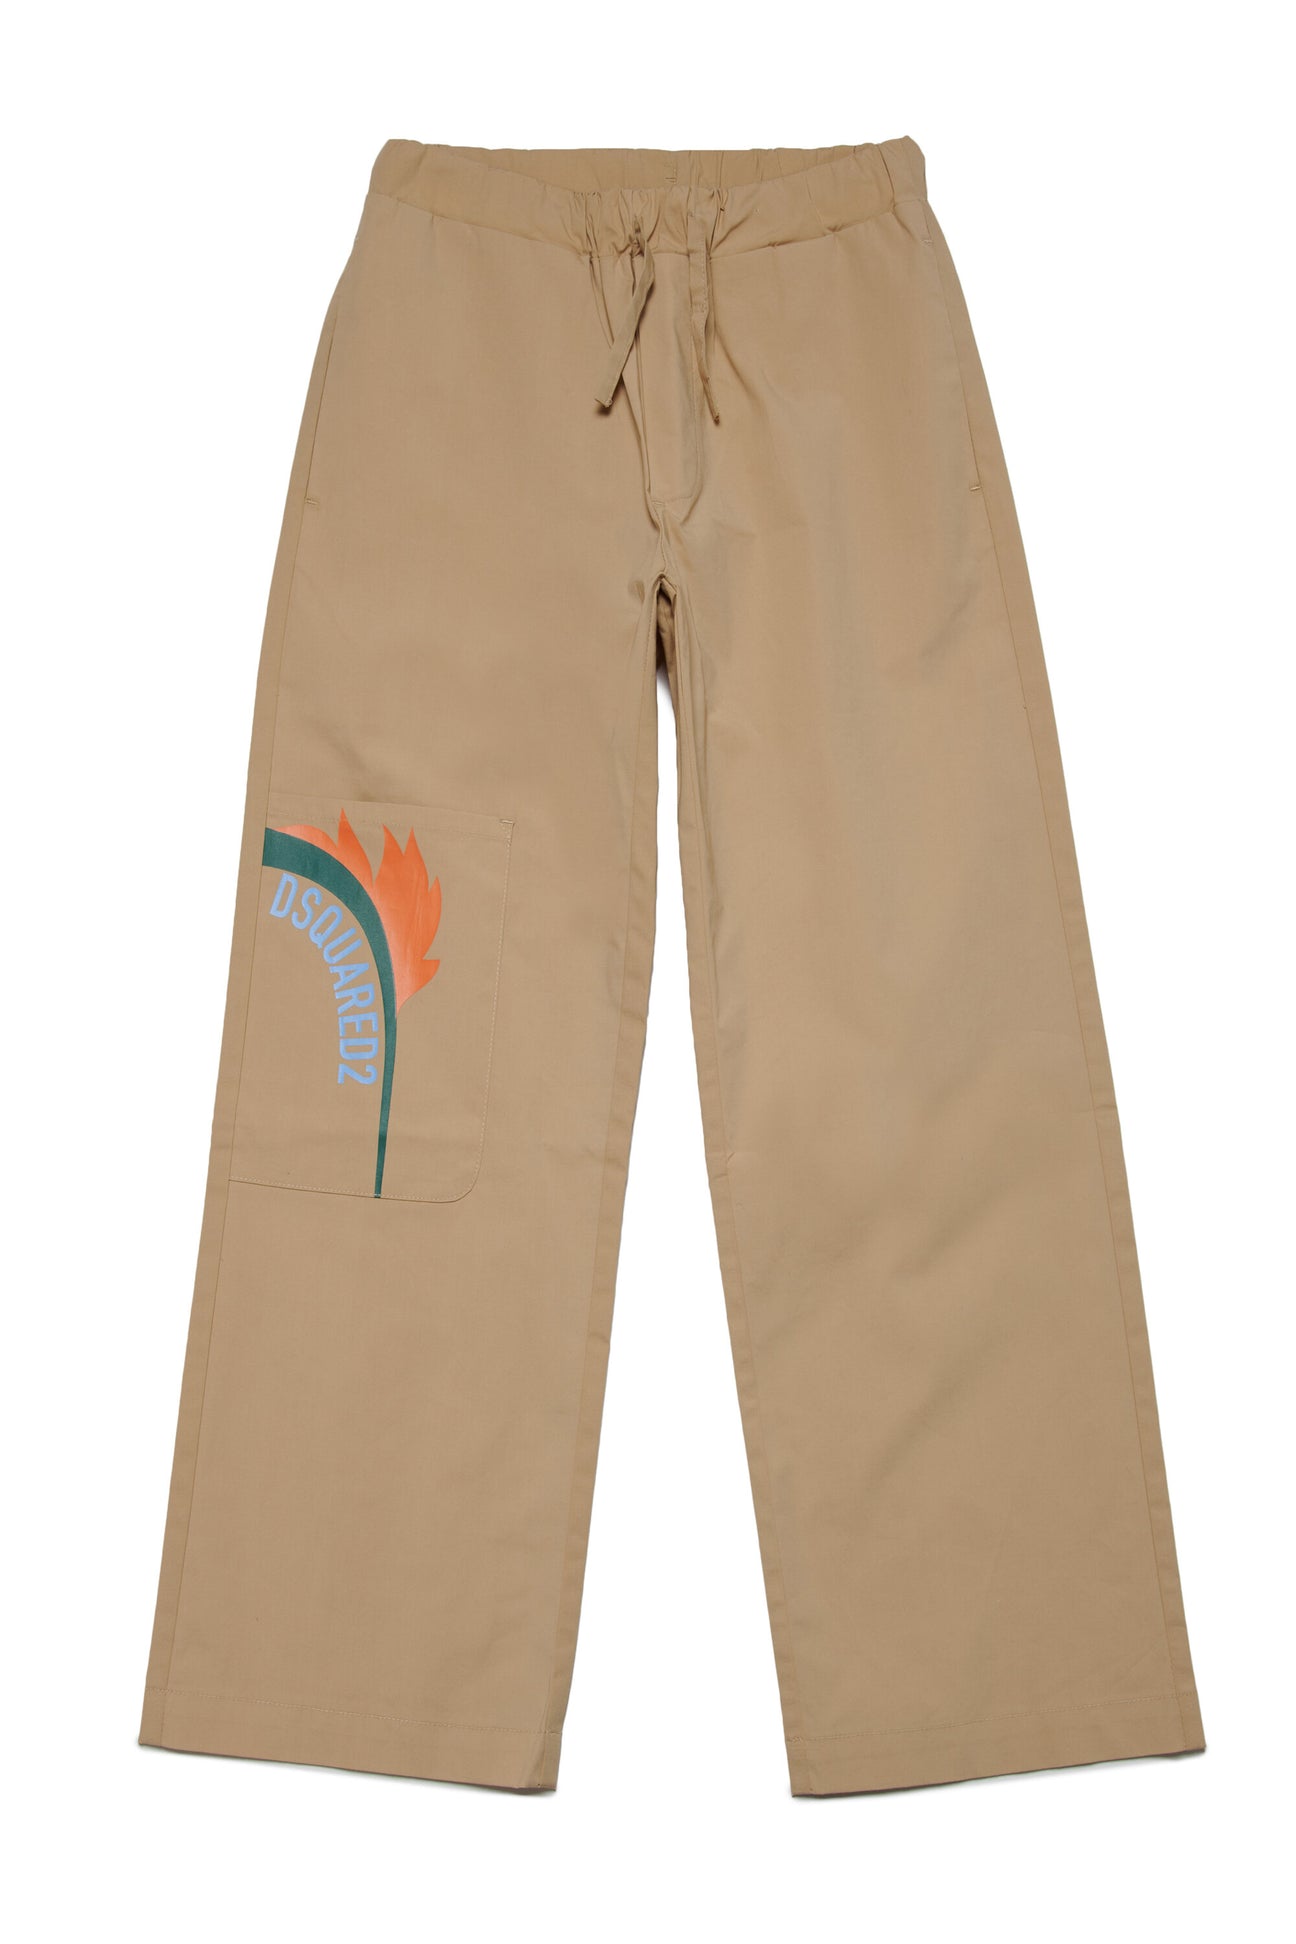 Pantalones ligeros con logotipo XEROX 